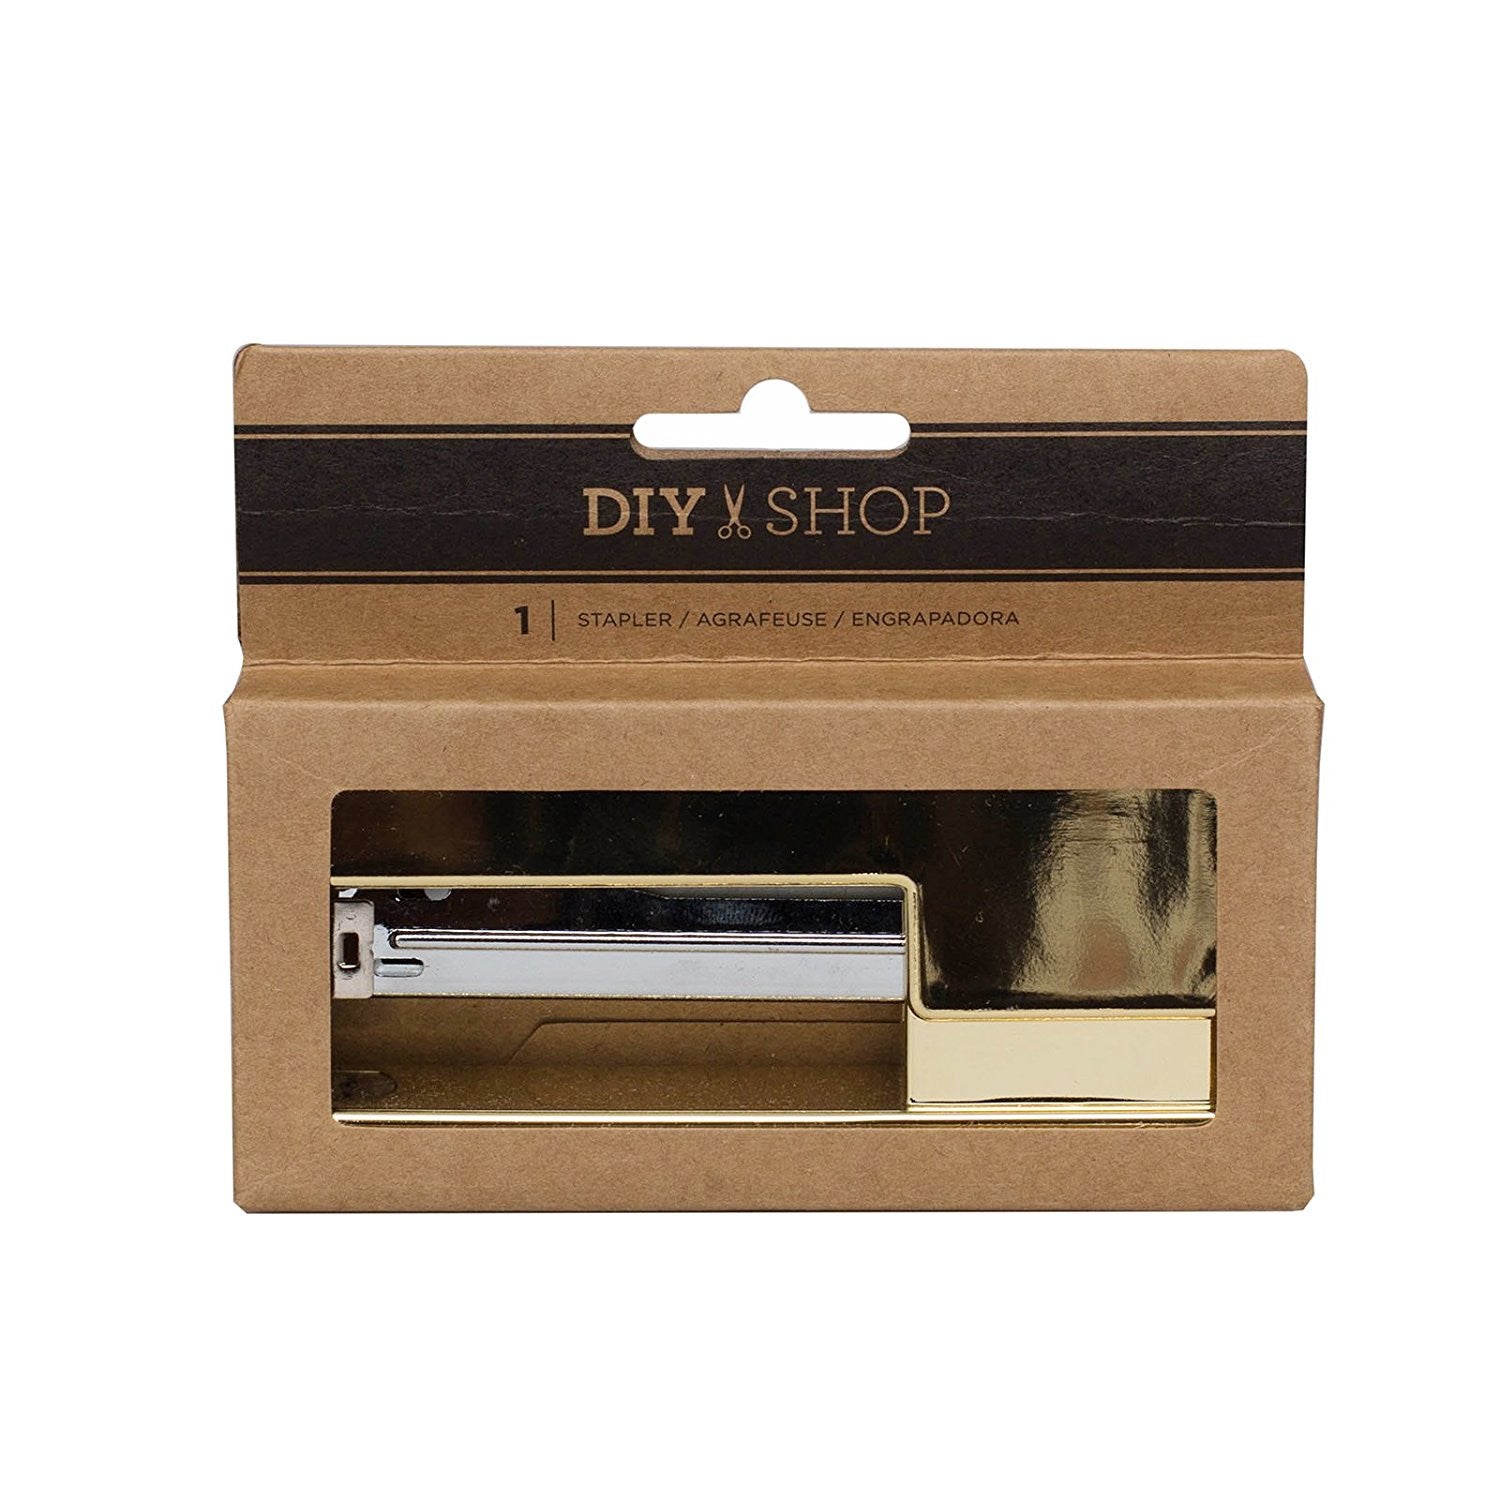 DIY & SHOP Stapler / Engrapadora